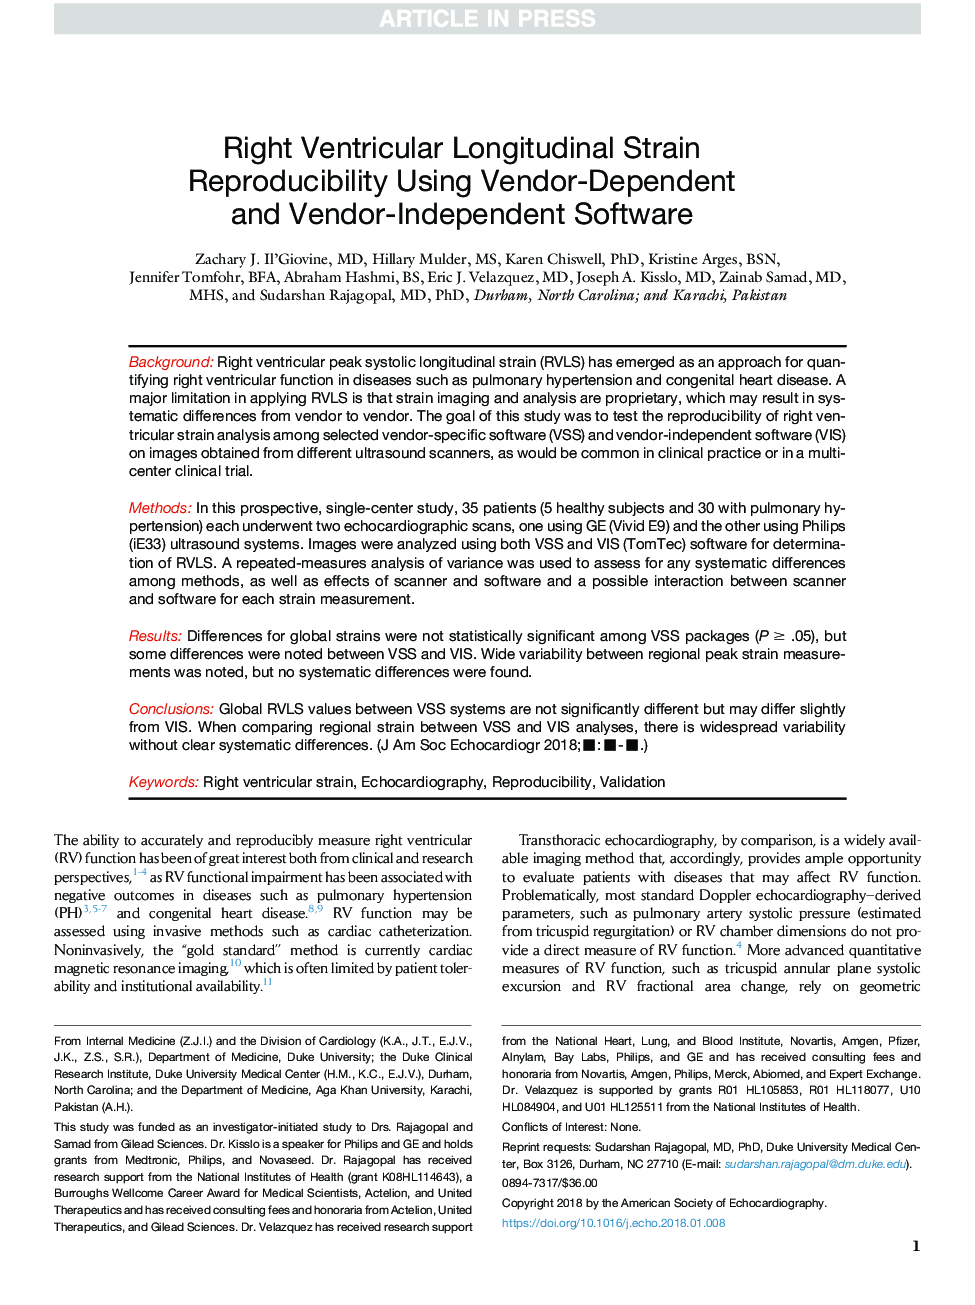 Right Ventricular Longitudinal Strain Reproducibility Using Vendor-Dependent and Vendor-Independent Software